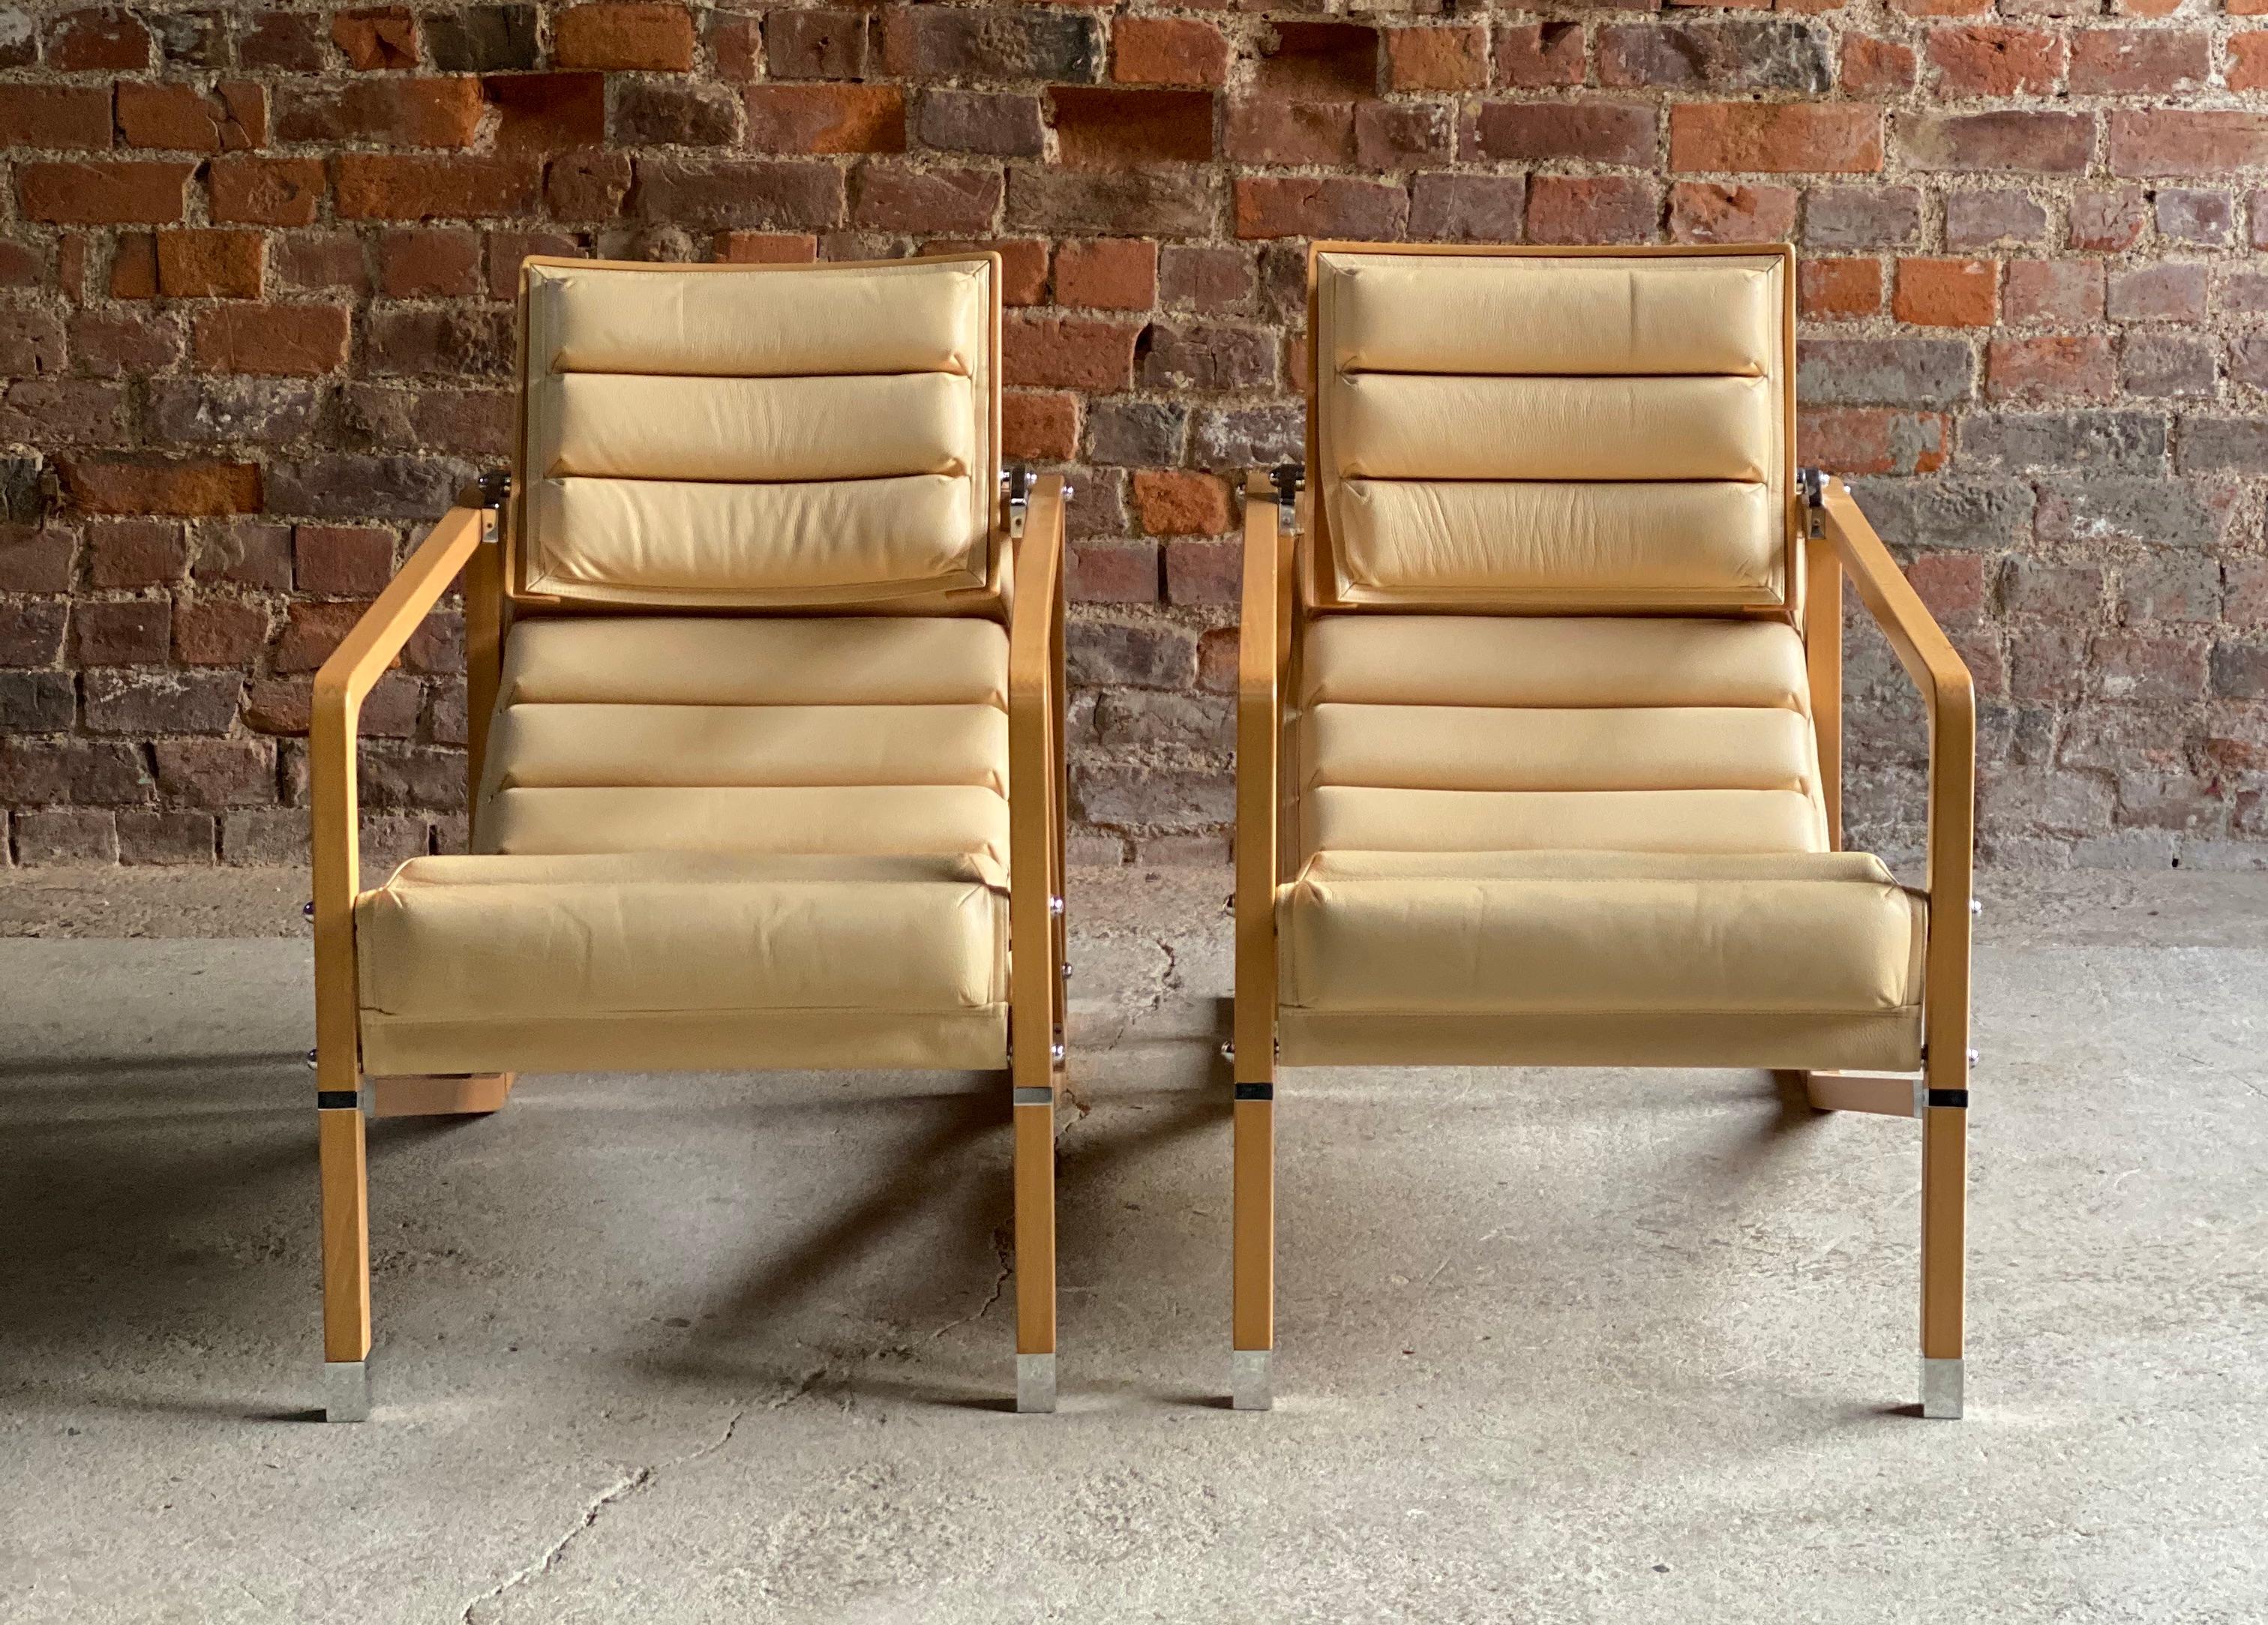 Contemporary Eileen Gray Transat Chairs in Cream Leather & Beech by Ecart International